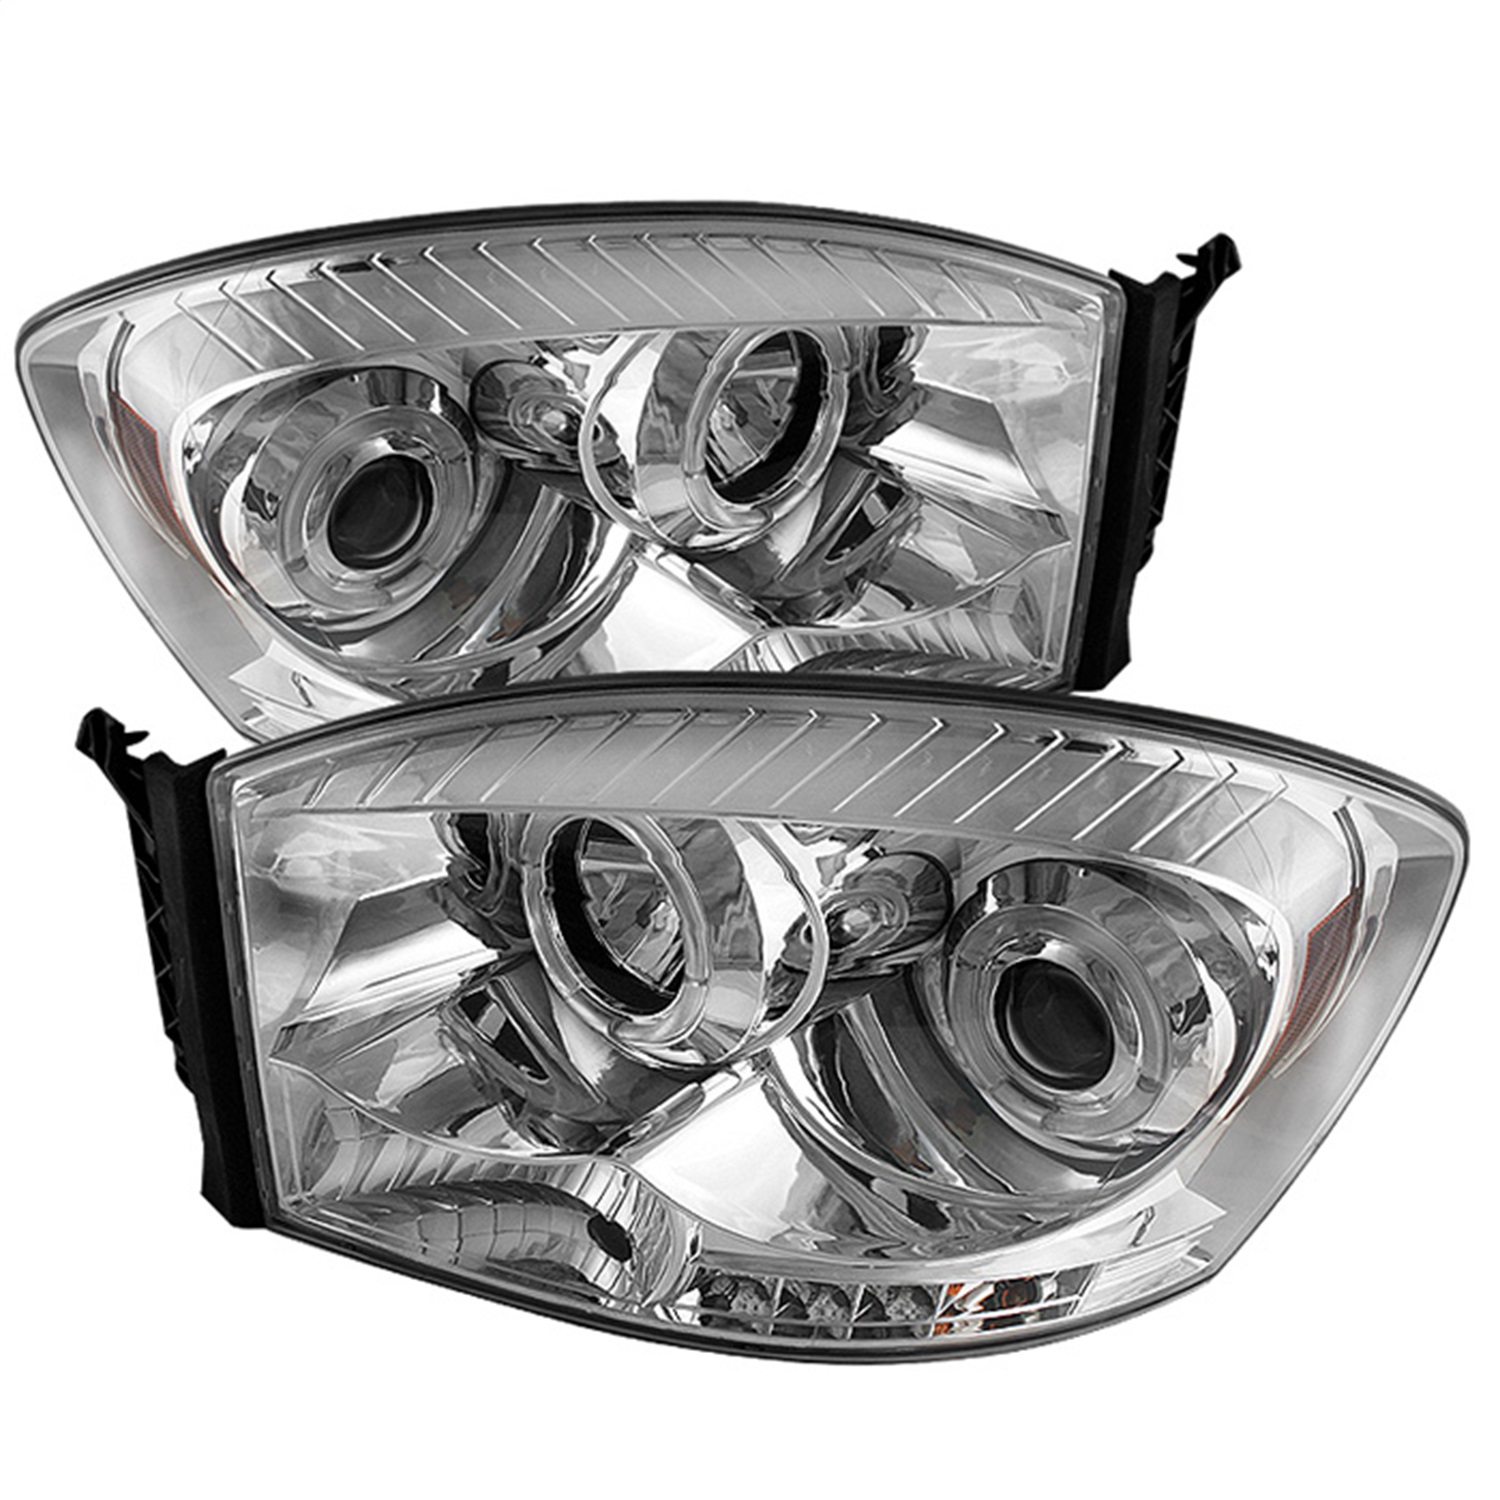 Spyder Auto 5010018 Halo LED Projector Headlights